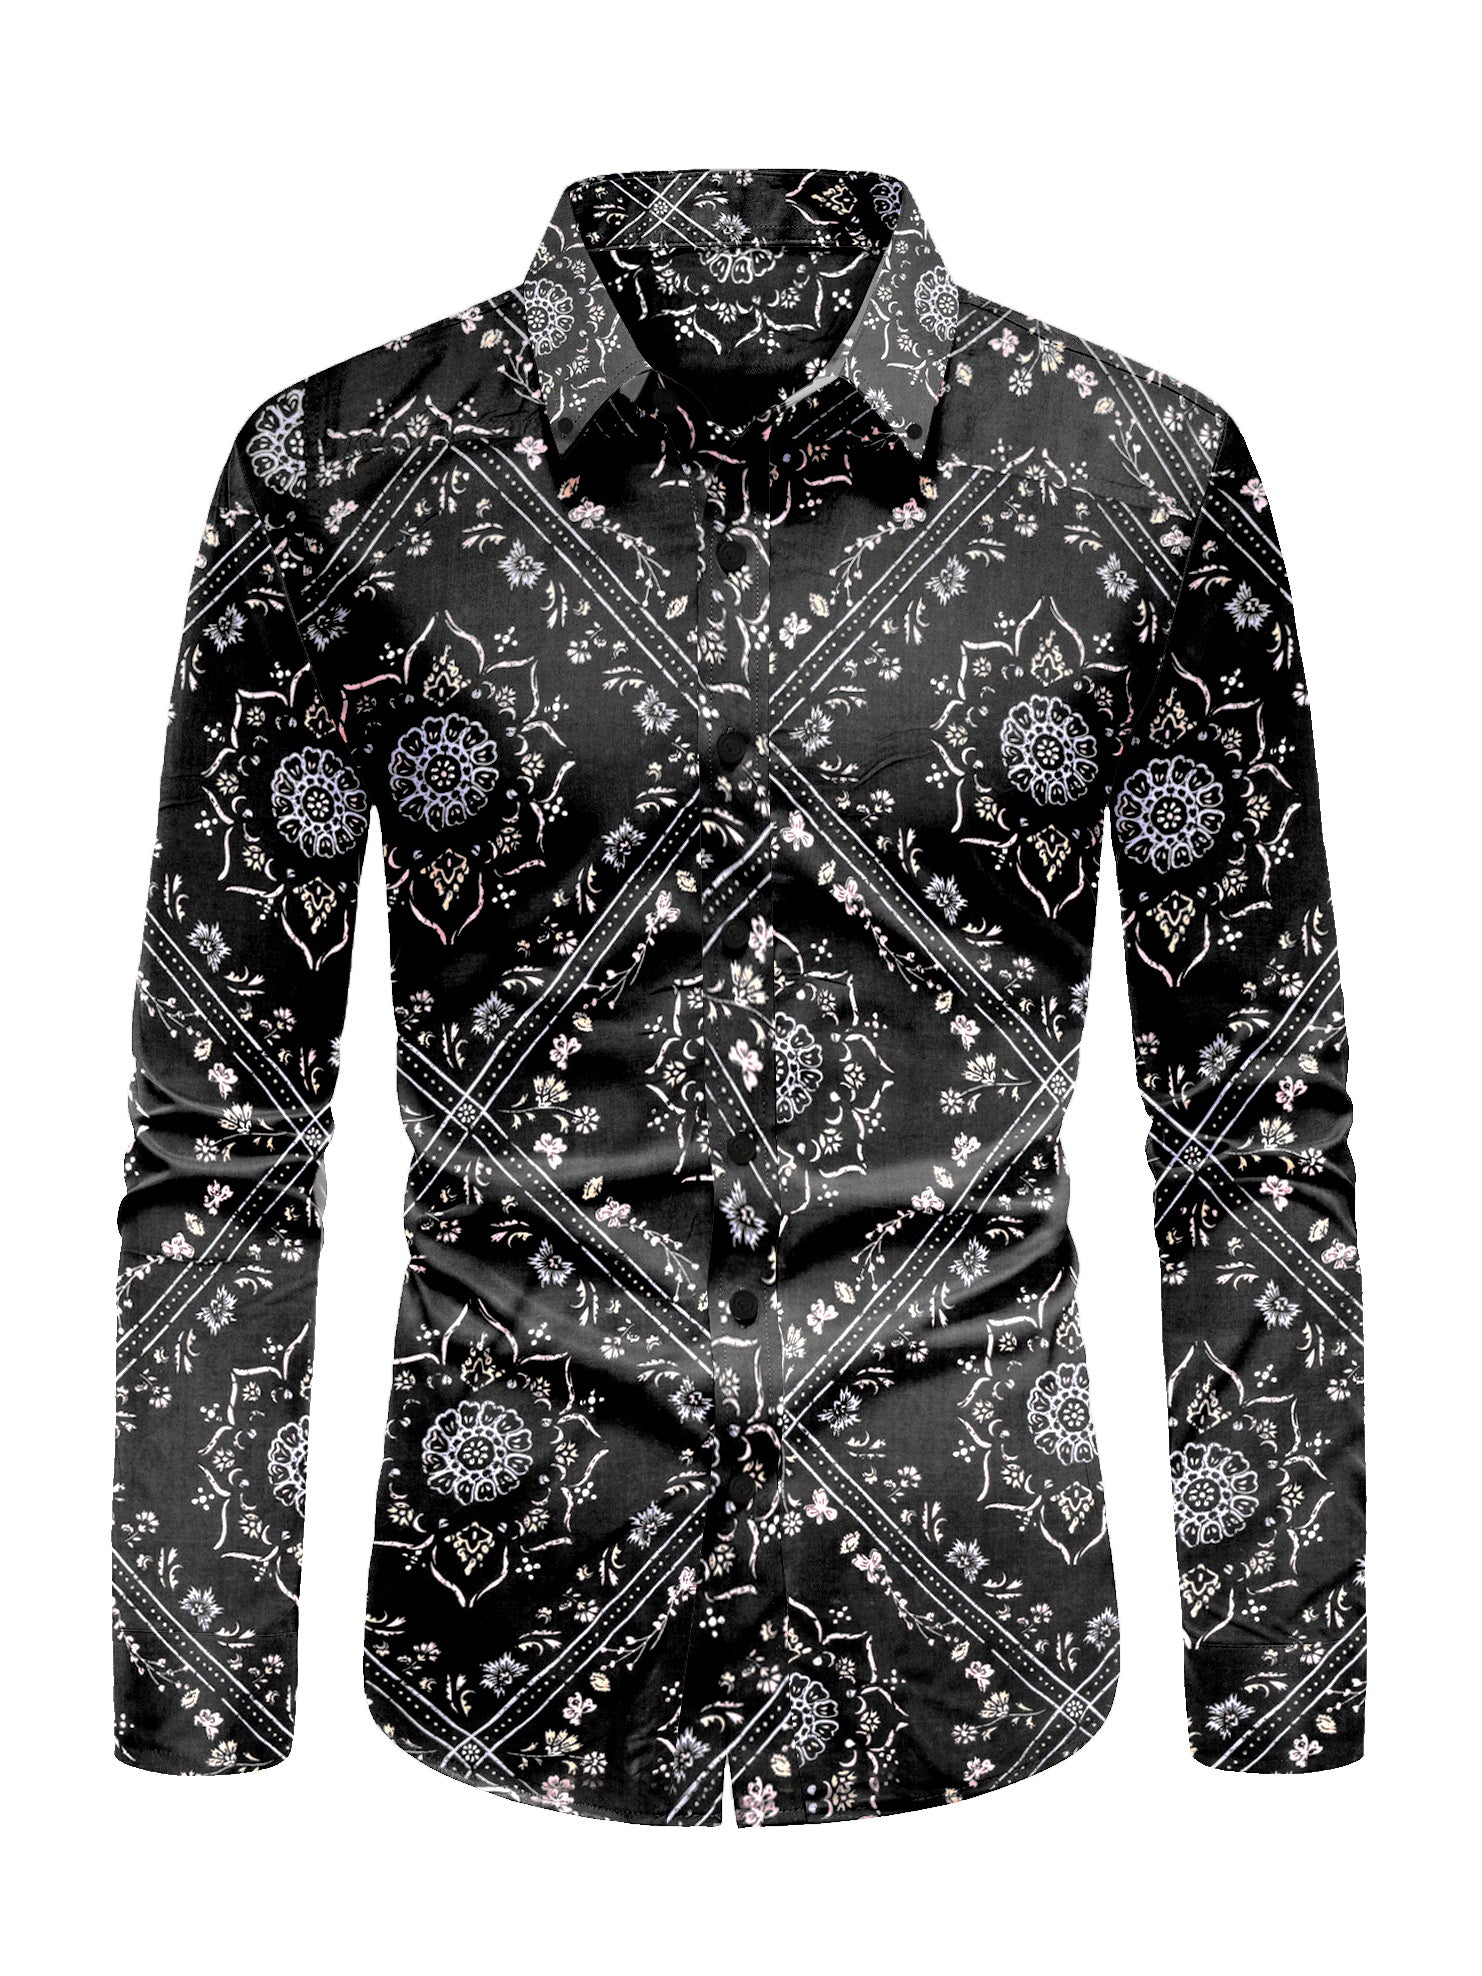 Oxen Nexoluce Premium Slim Fit Casual Shirt For Men-Black with Allover Print-SP2134